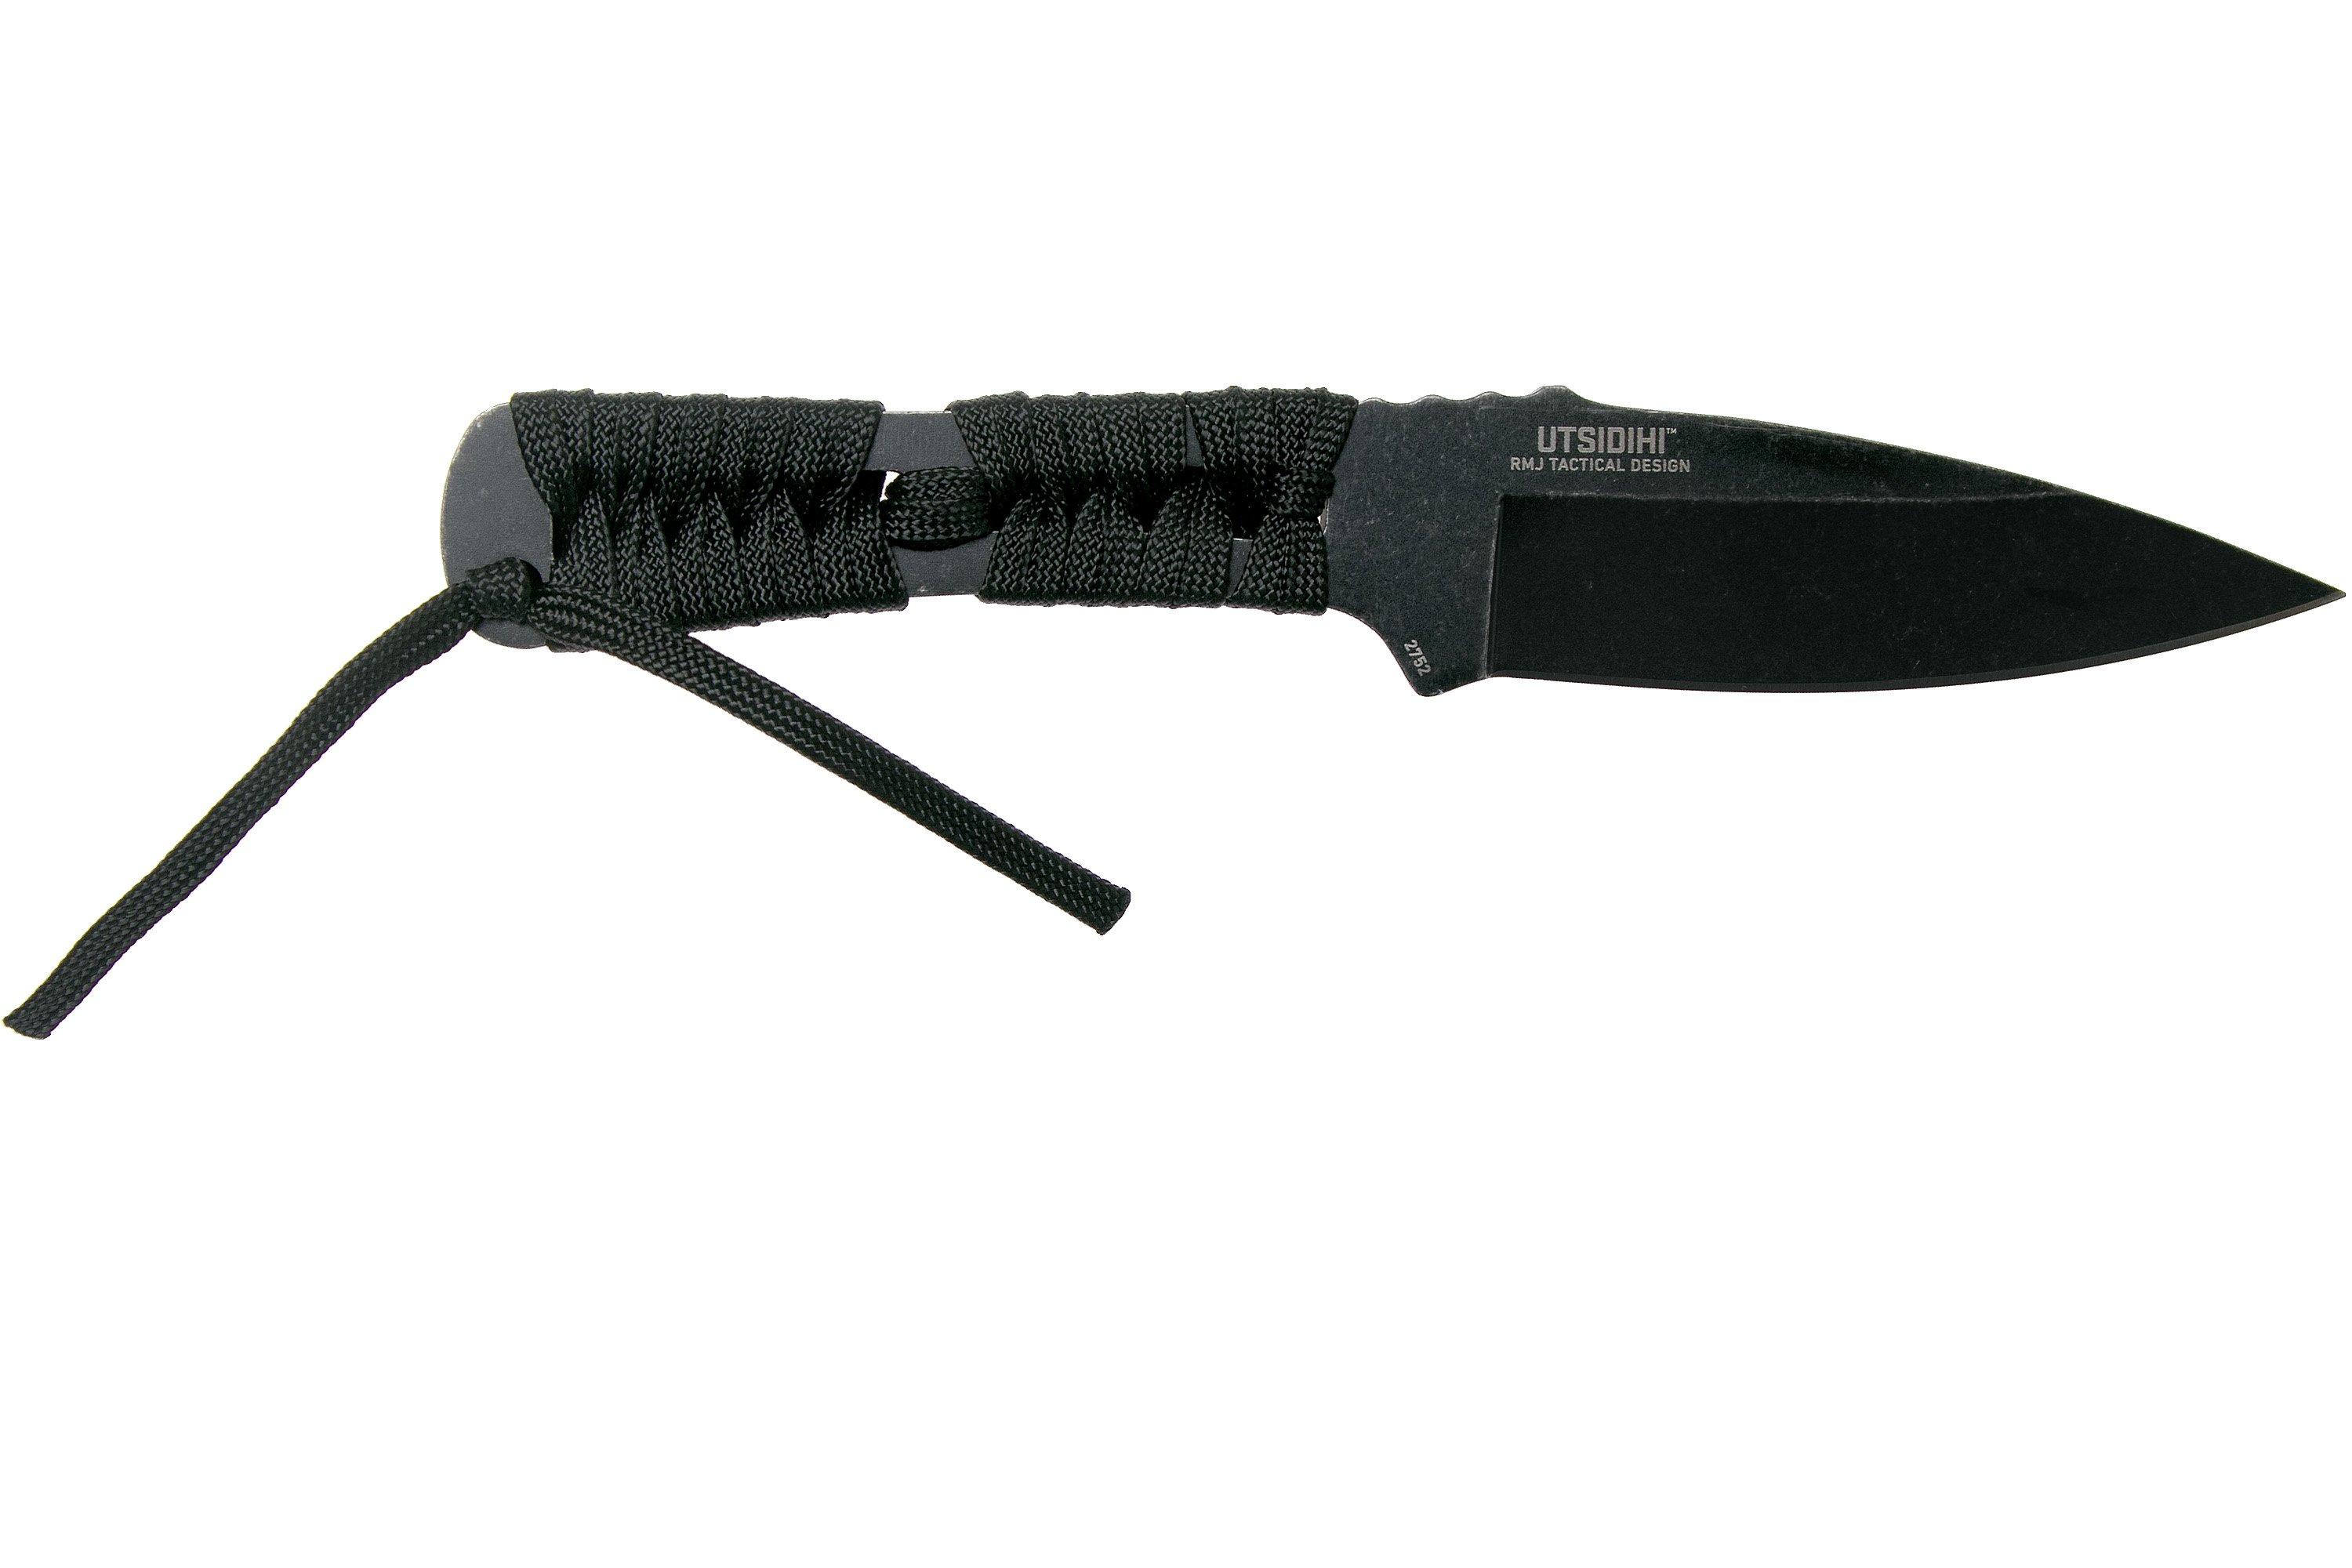 crkt-utsidihi-2752-fixed-knife-rmj-tactical-design-advantageously